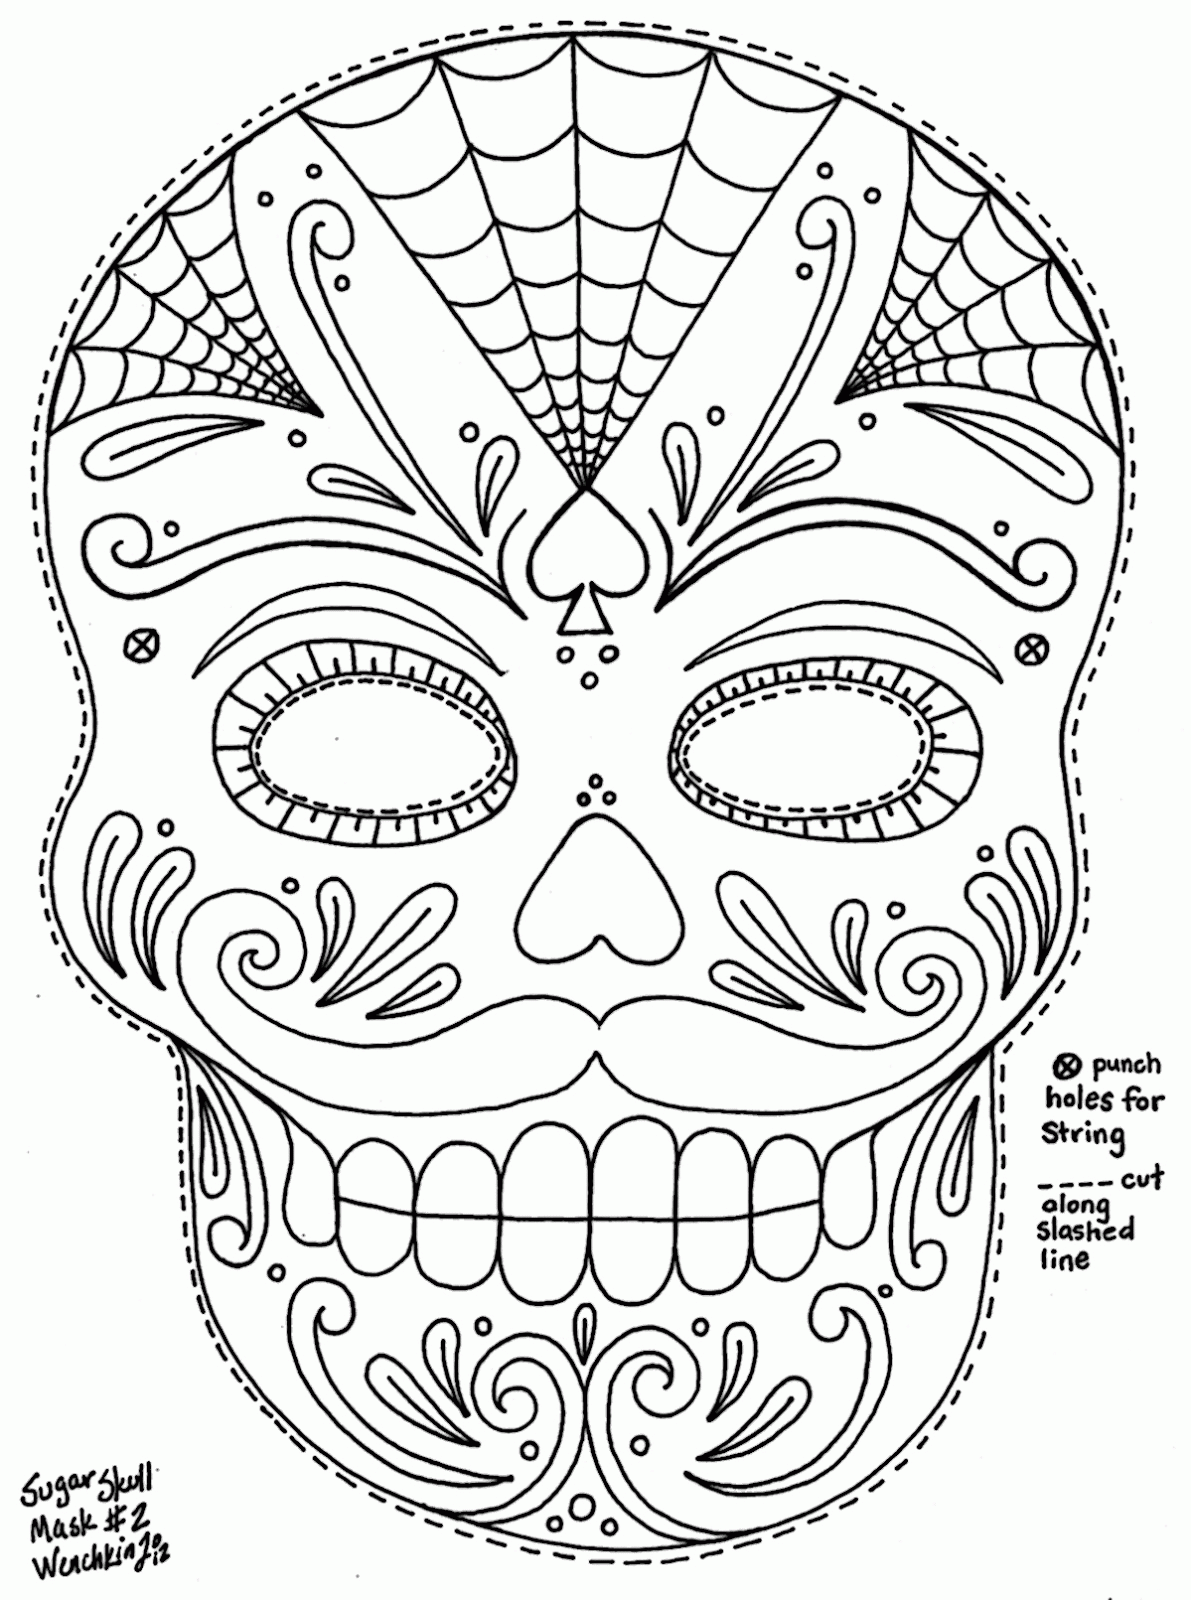 12 Pics of Sugar Skull Halloween Coloring Pages - Sugar Candy ...